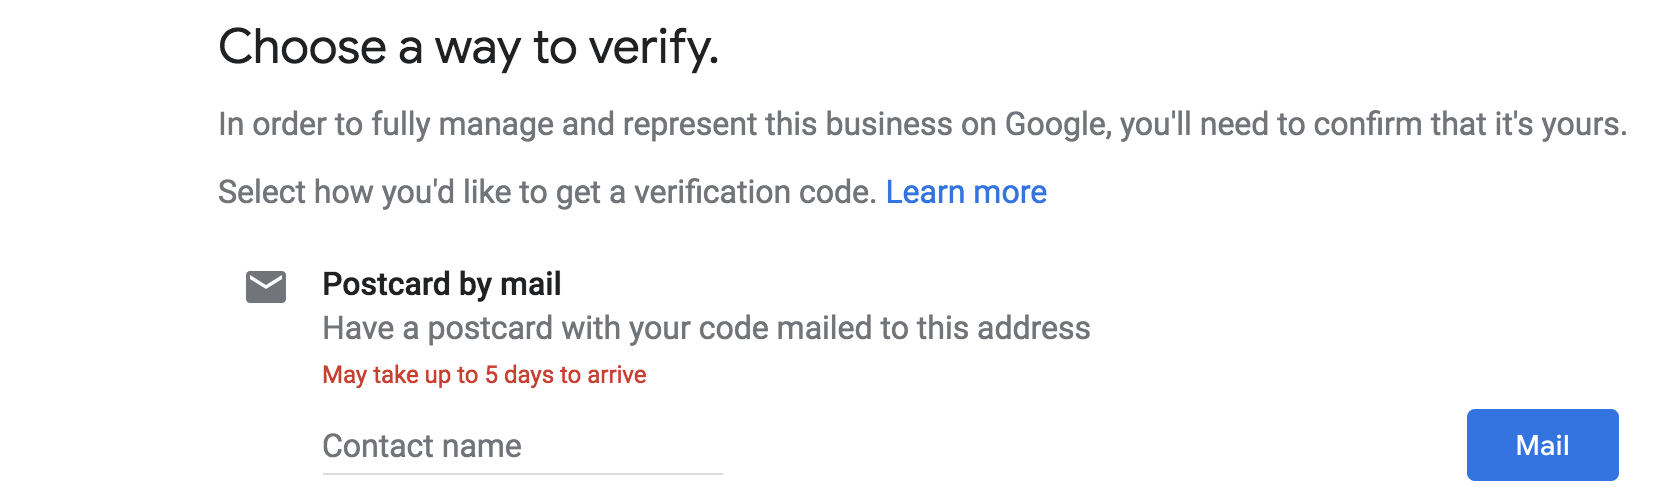 Display of Google Address Verification Methods Send A Postcard Option